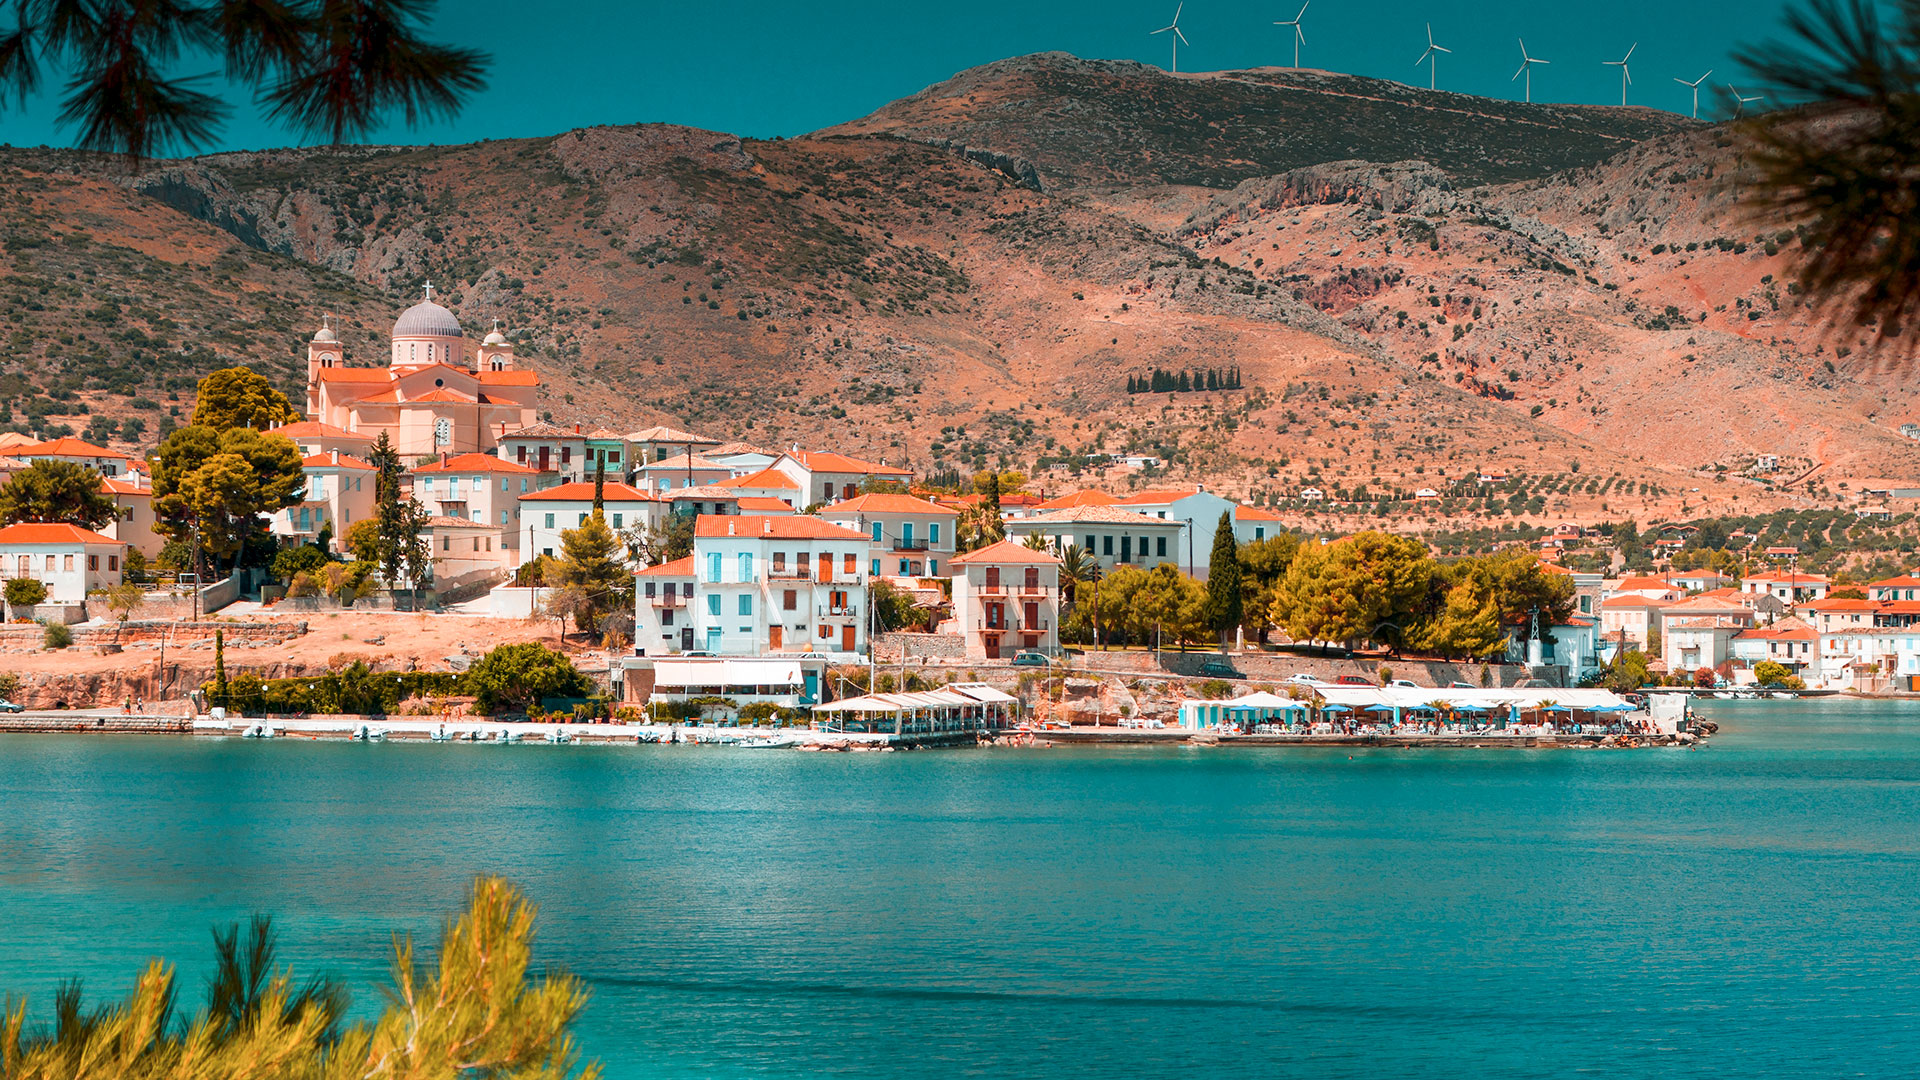 Galaxidi coastal town in Central Greece